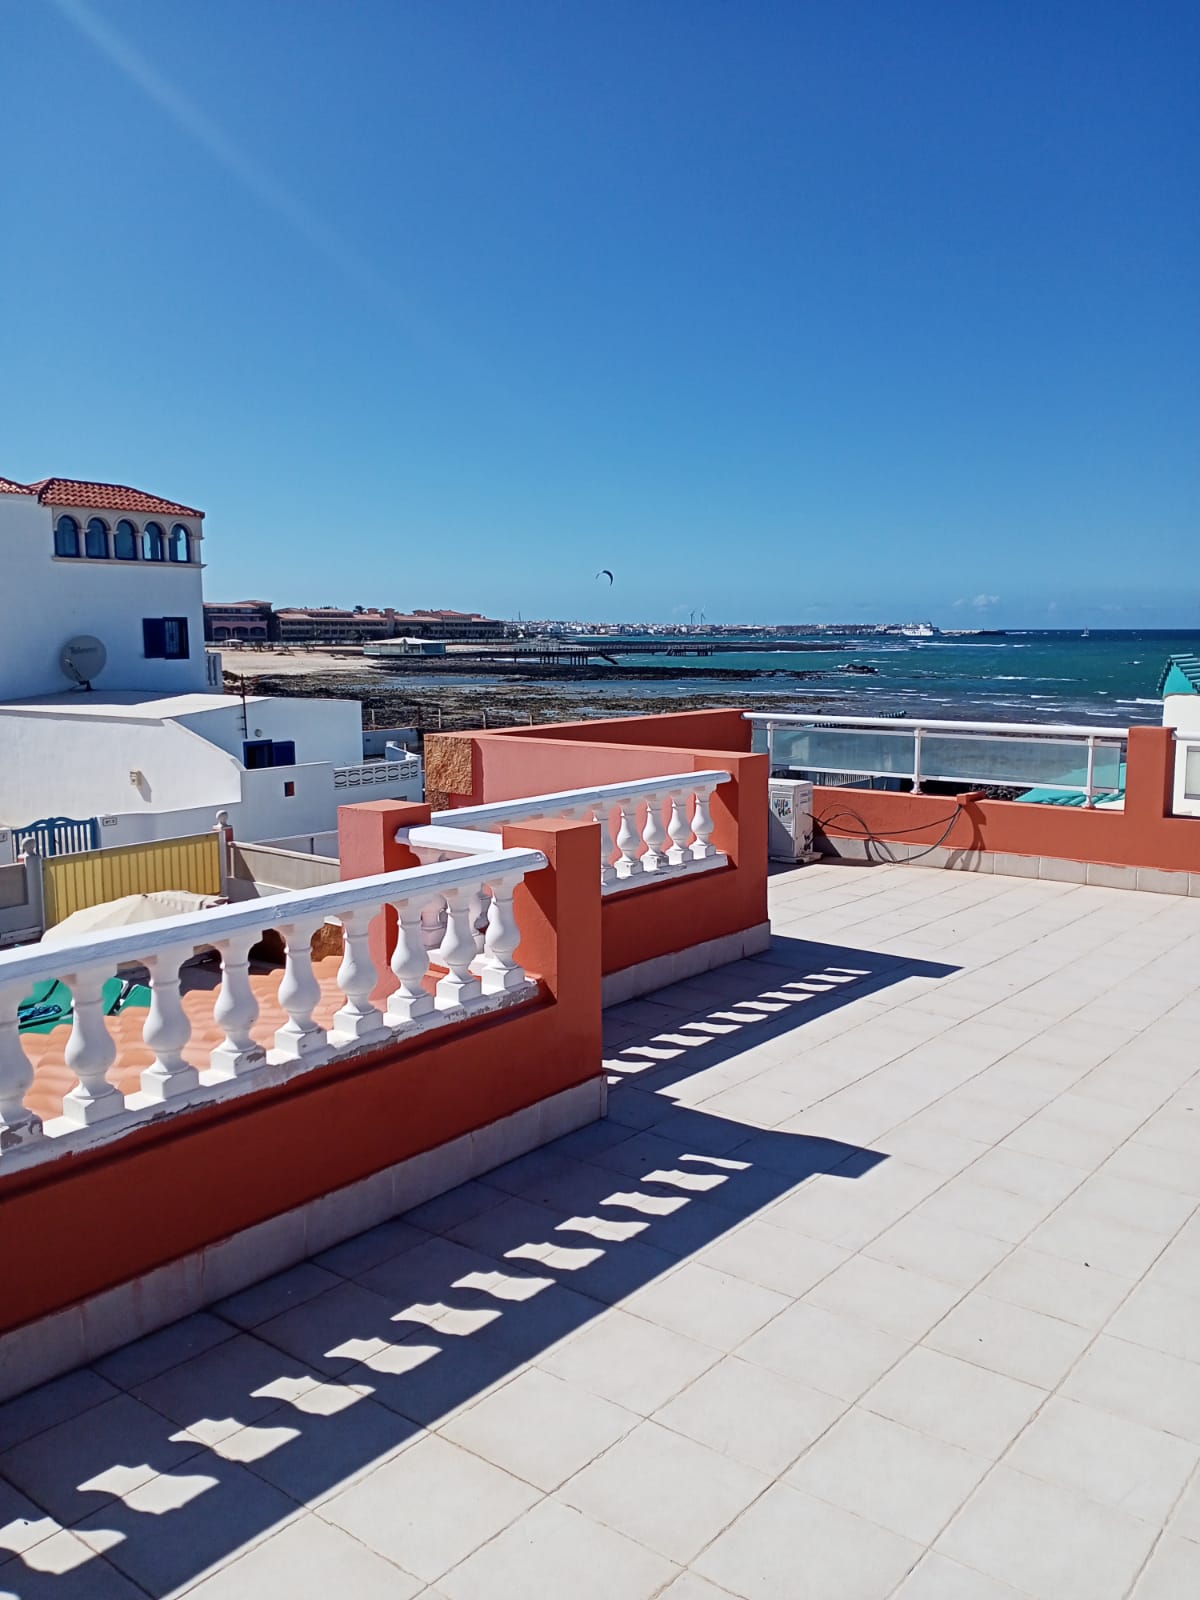 Fimapaire - Exlcusive expat villa on Fuerteventura